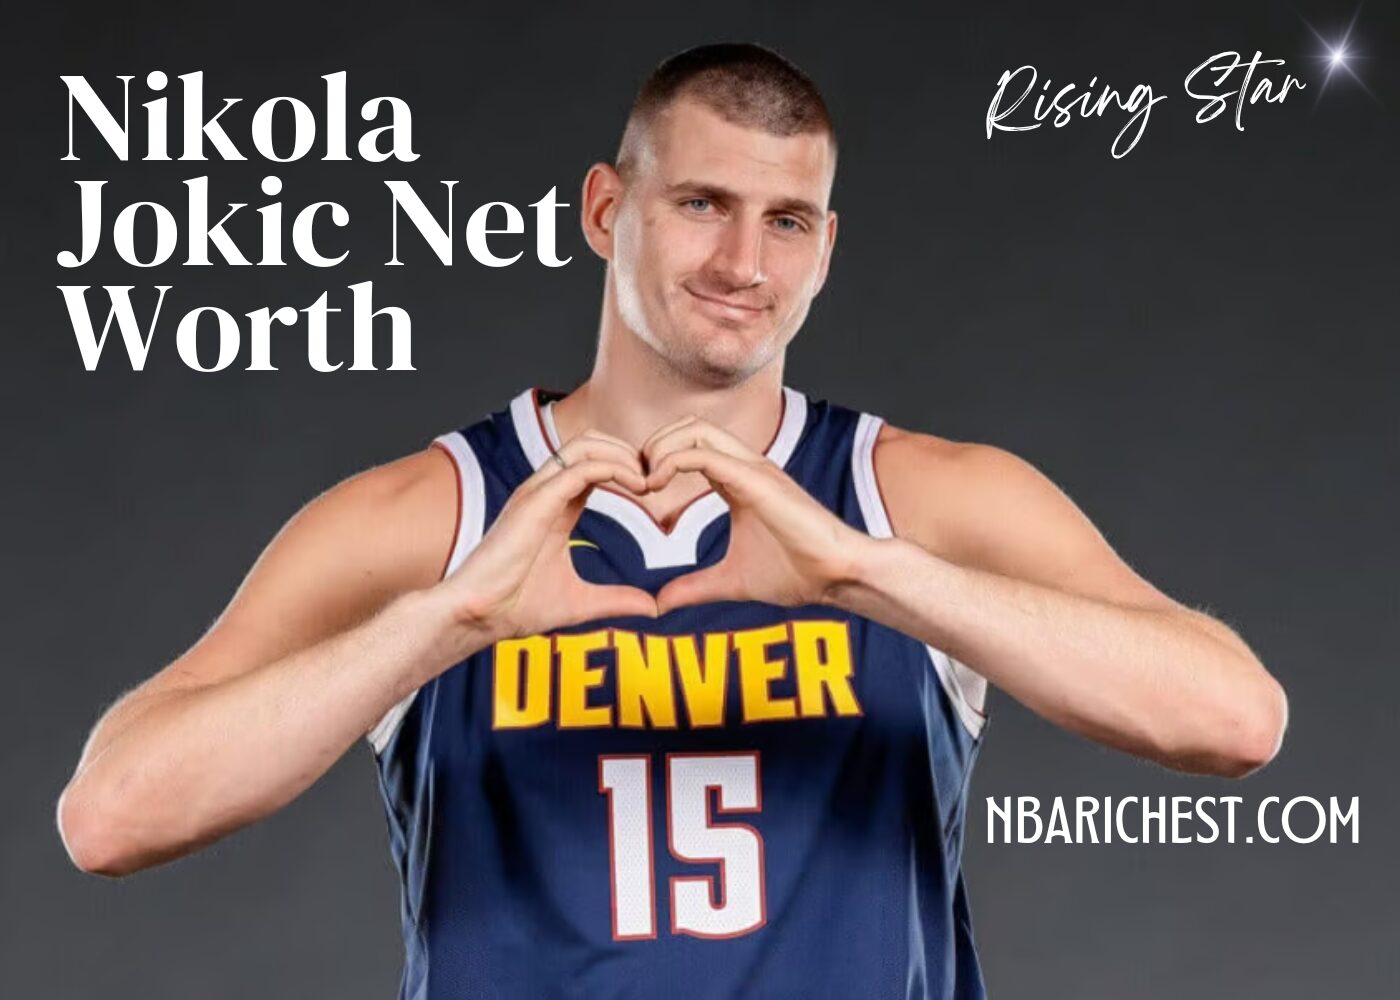 An infographic of Nikola Jokic Net Worth